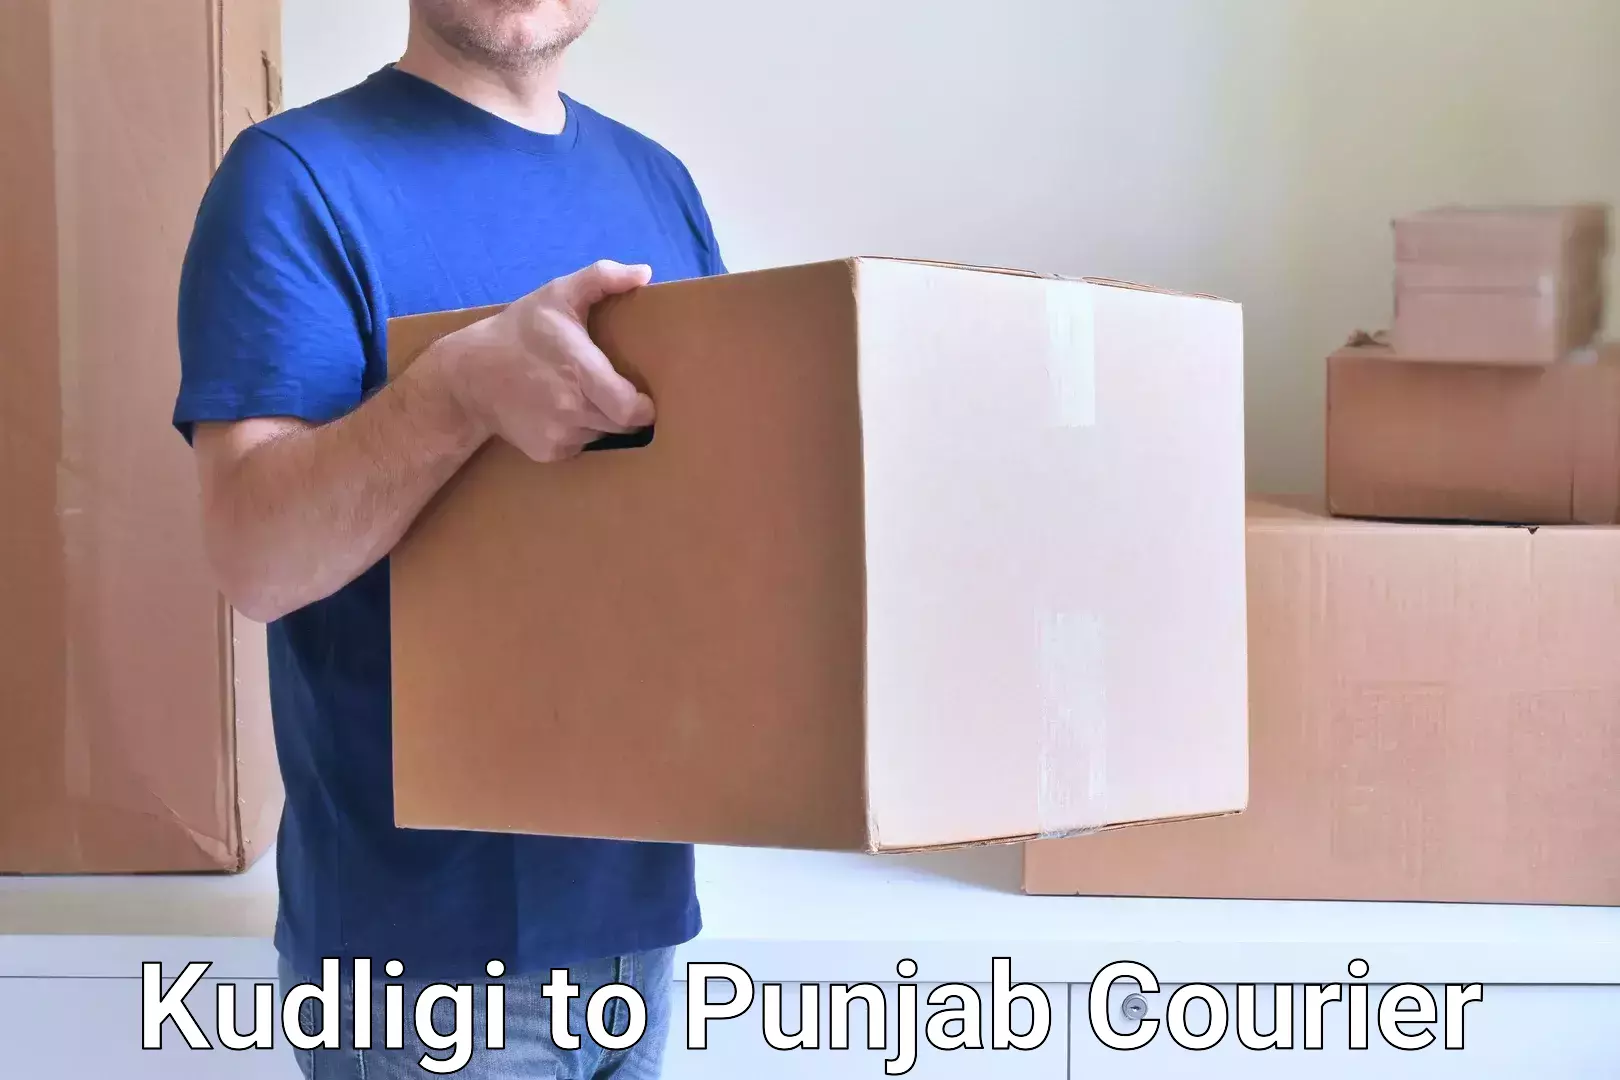 High-quality delivery services Kudligi to Punjab